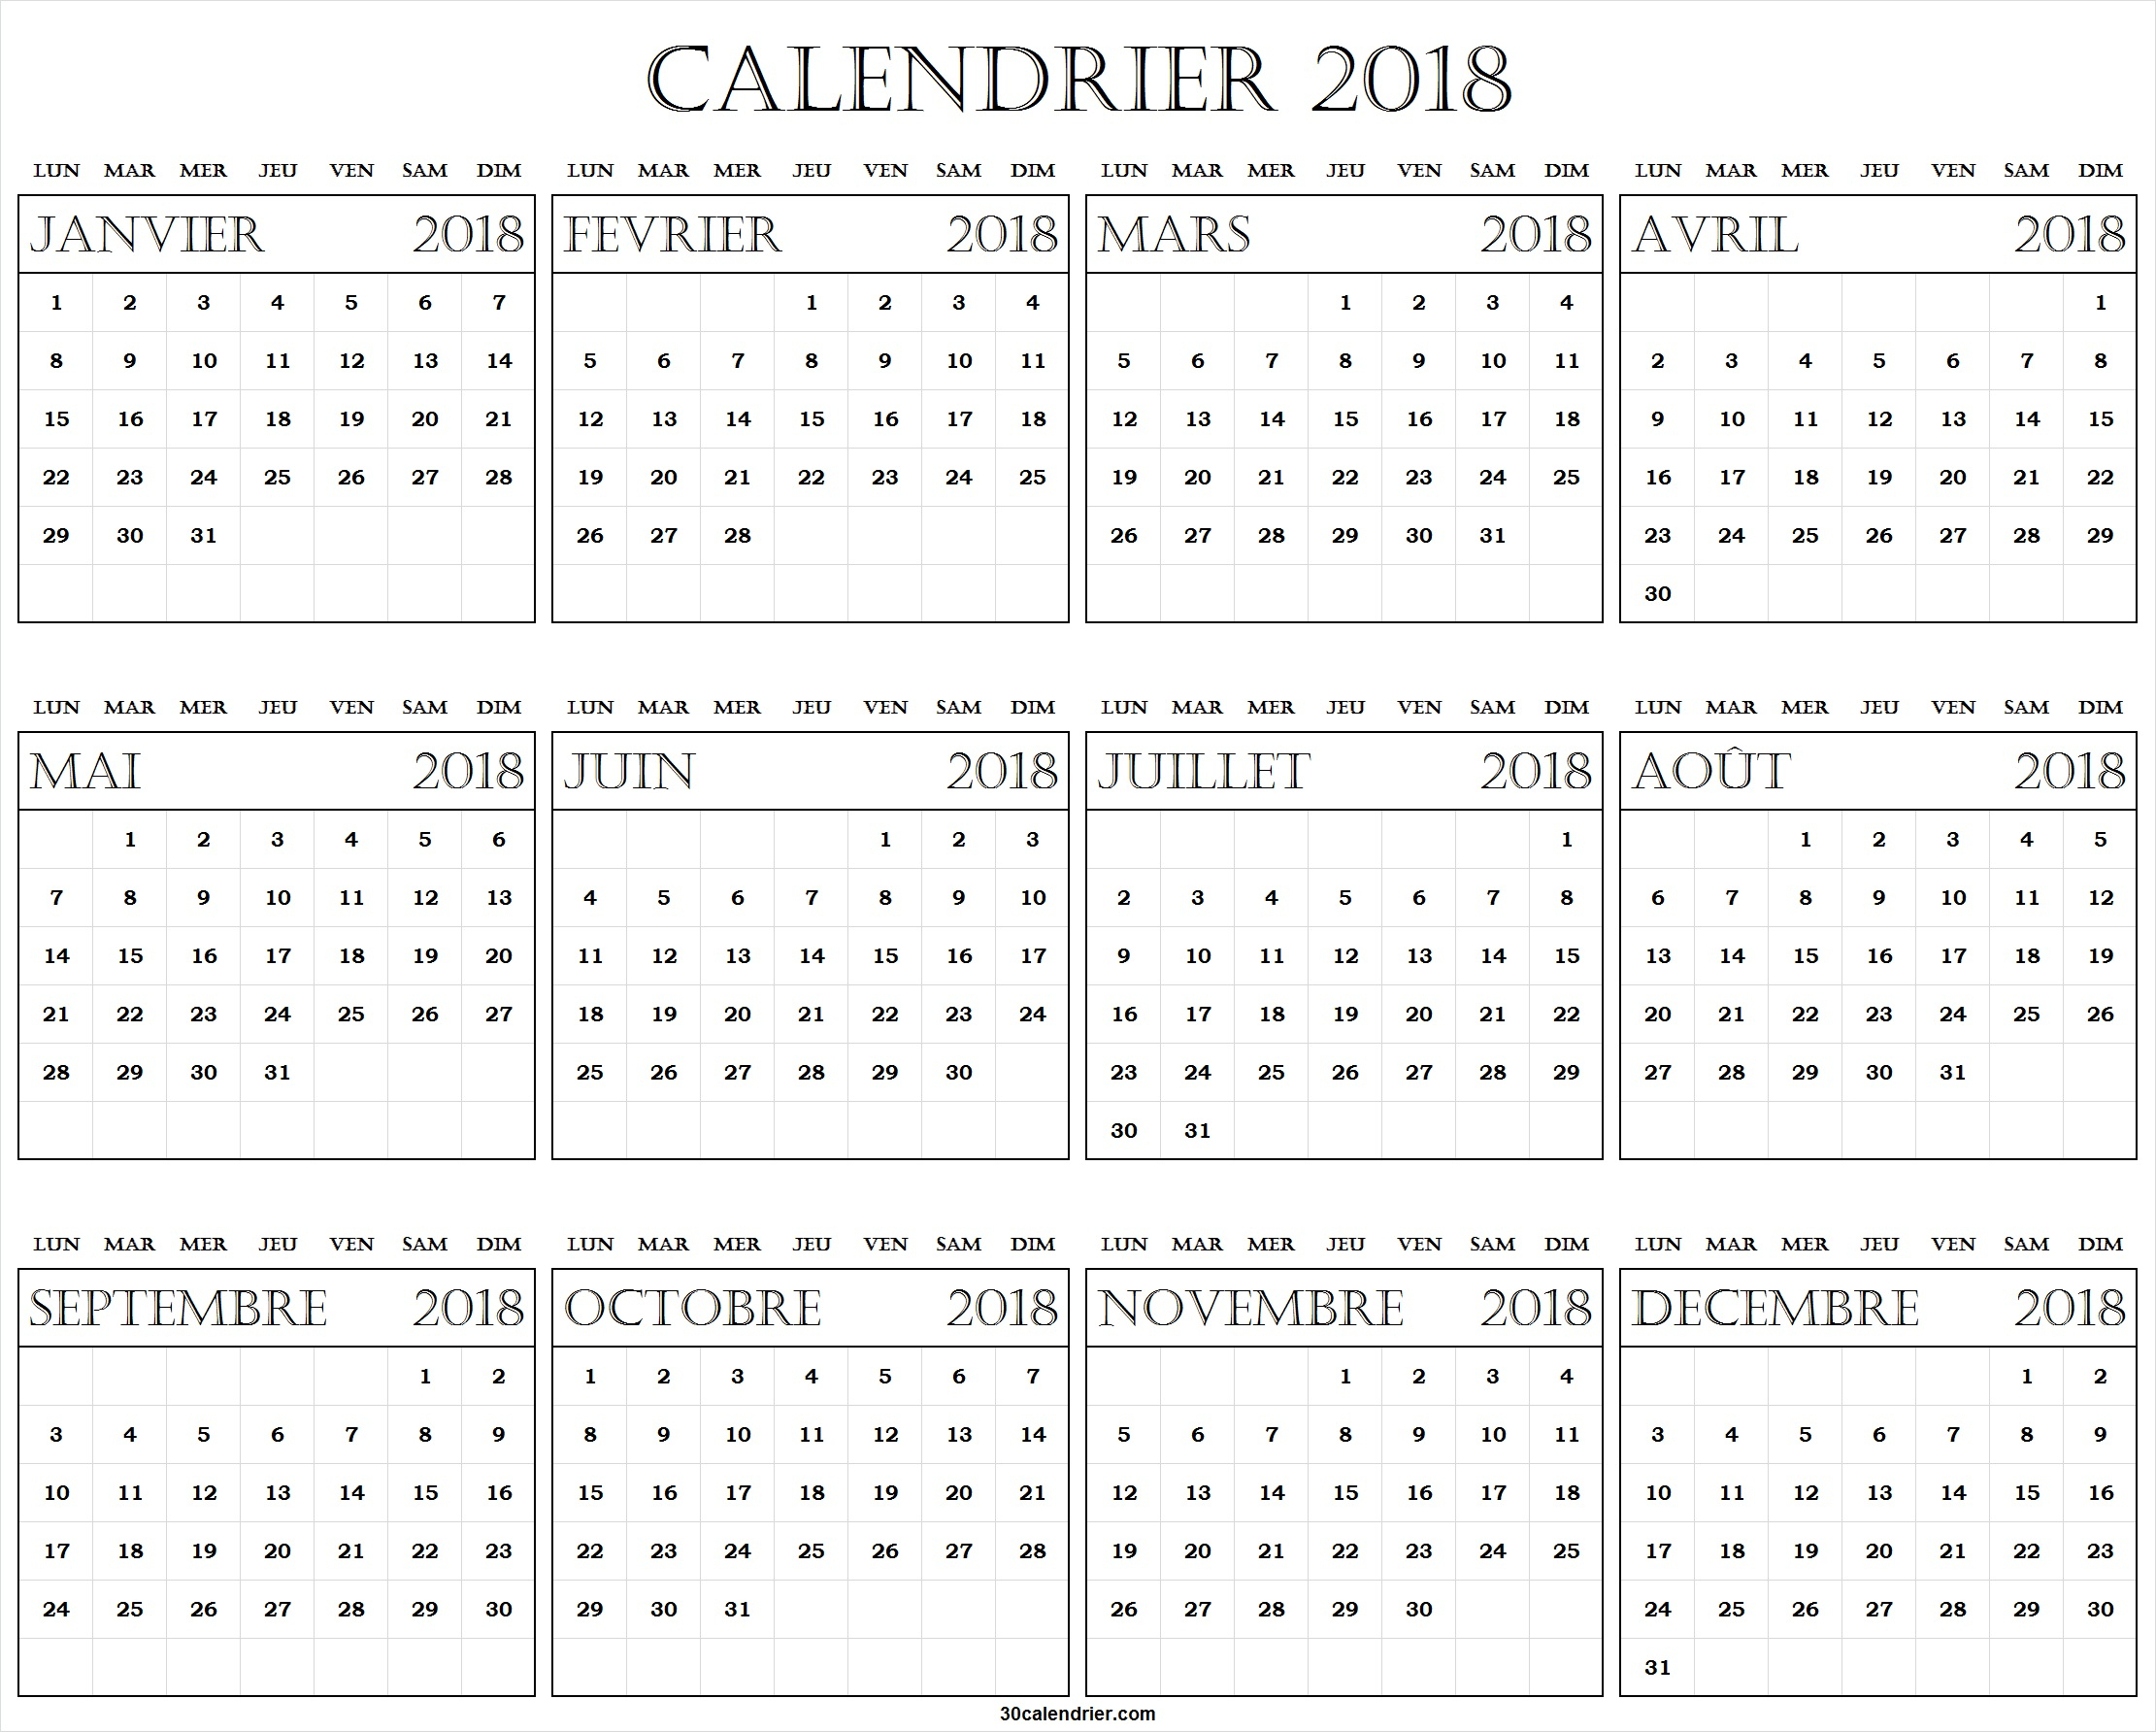 Calendrier Mensuel 2018 À Imprimer | Imprimer Calendrier dedans Calendrier Mensuel 2018 À Imprimer